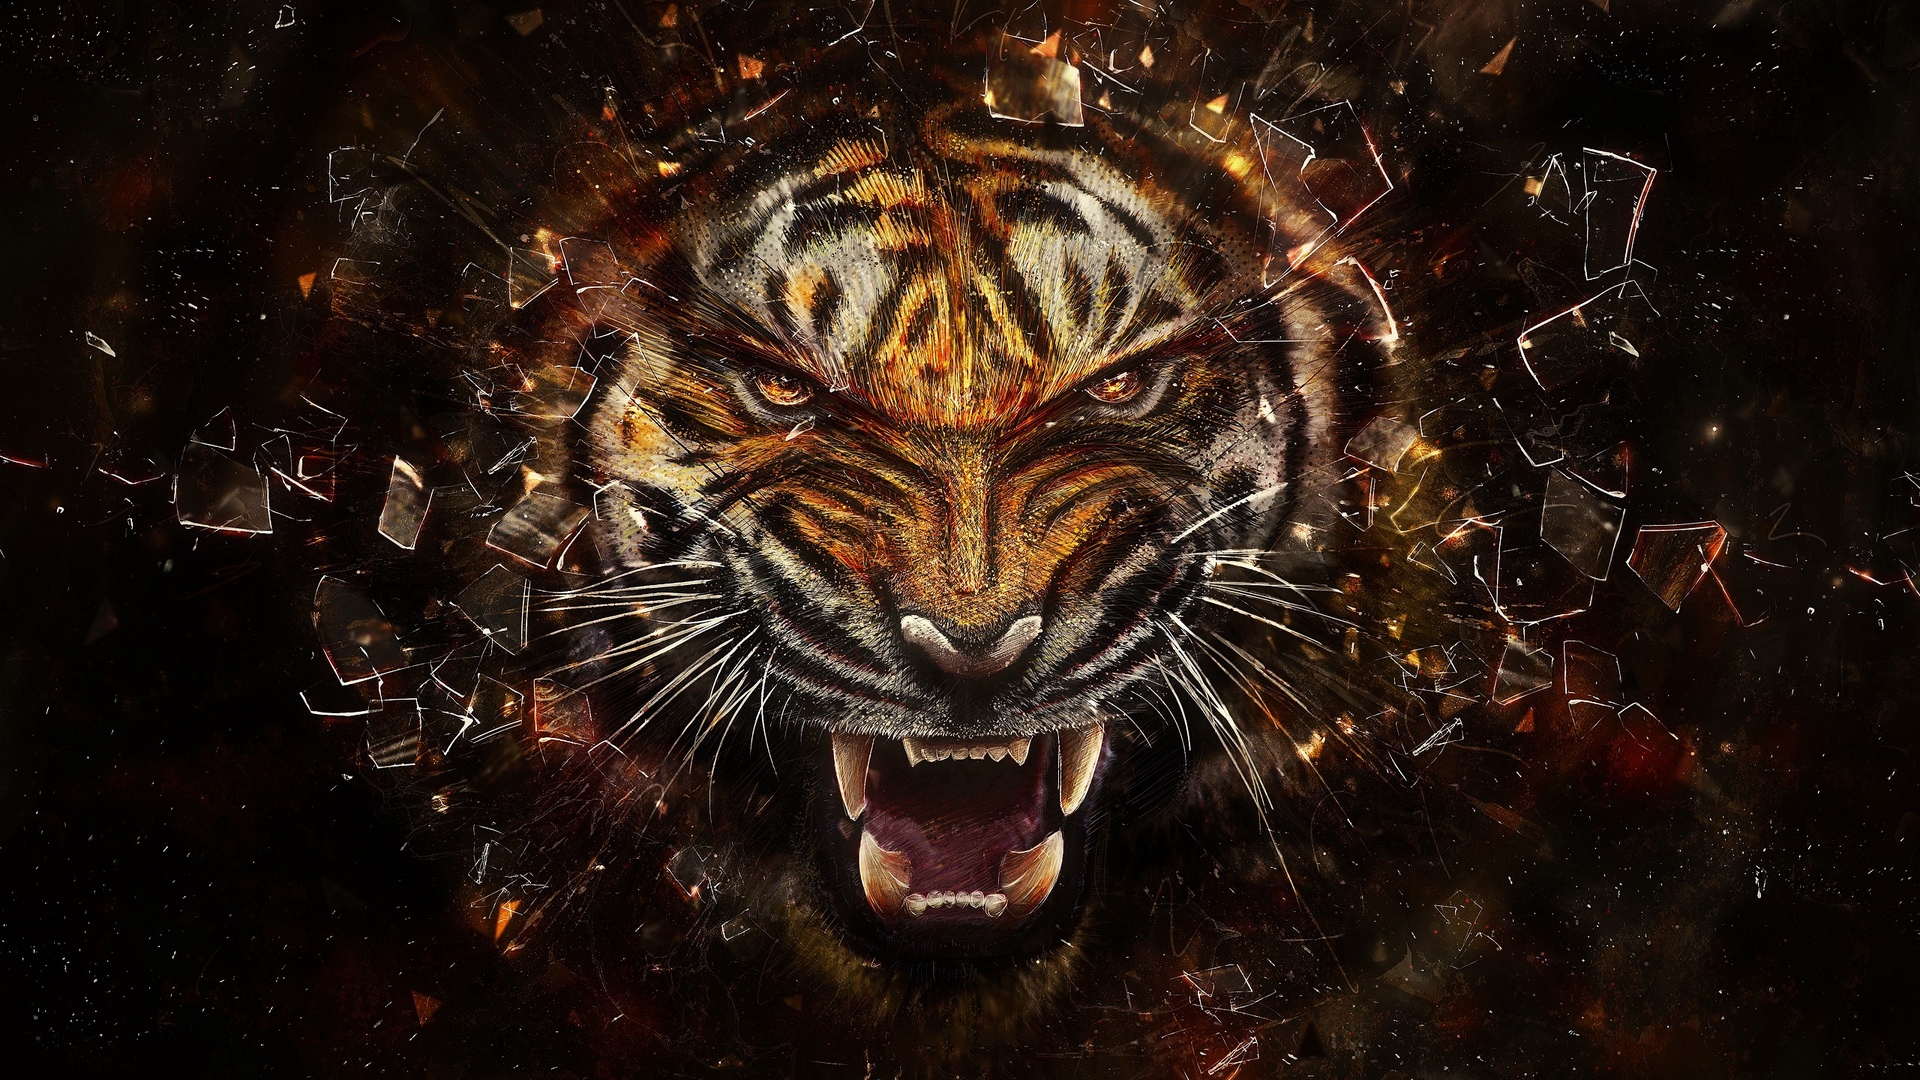 Wallpaper Tiger Glass Shards Aggression